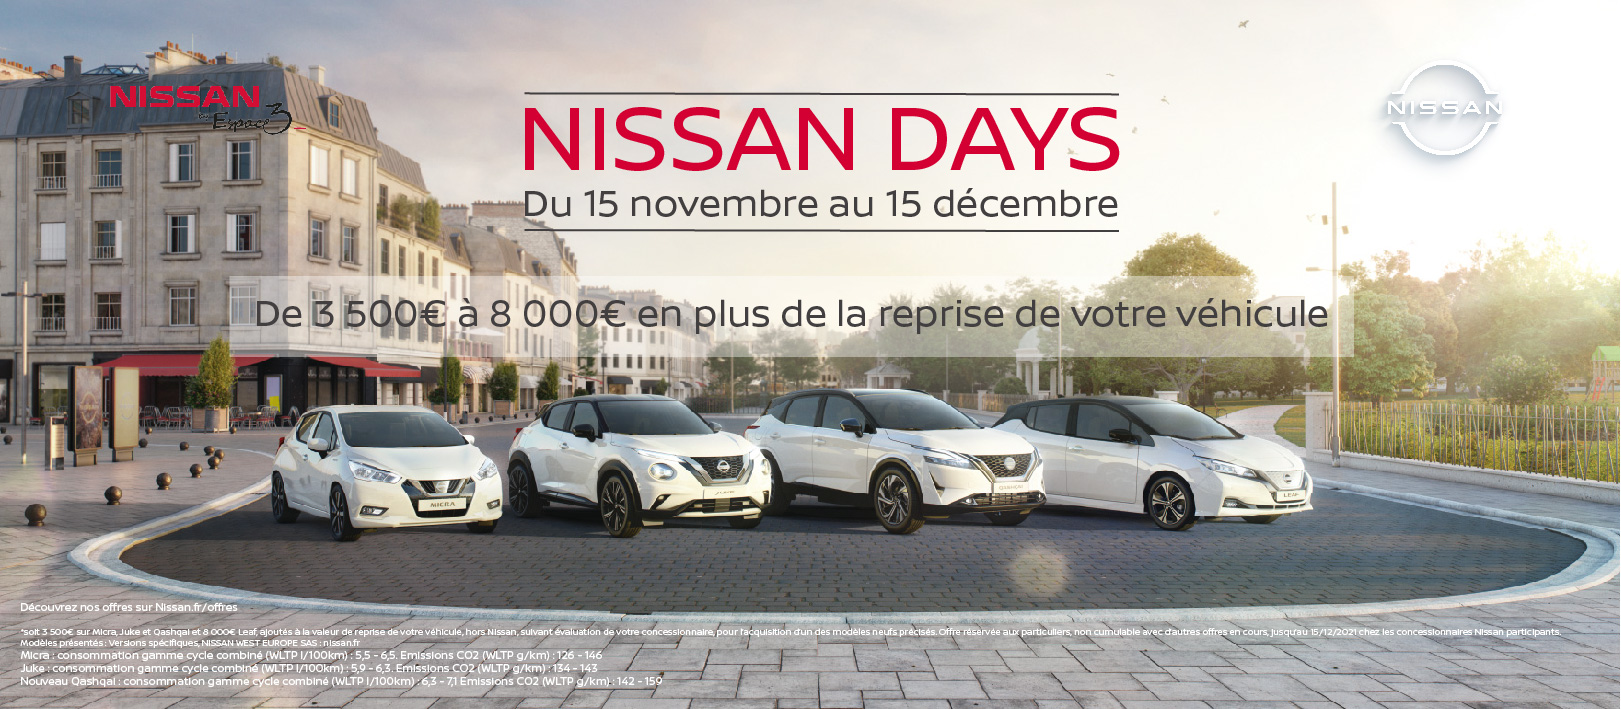 Nissan Days landing page